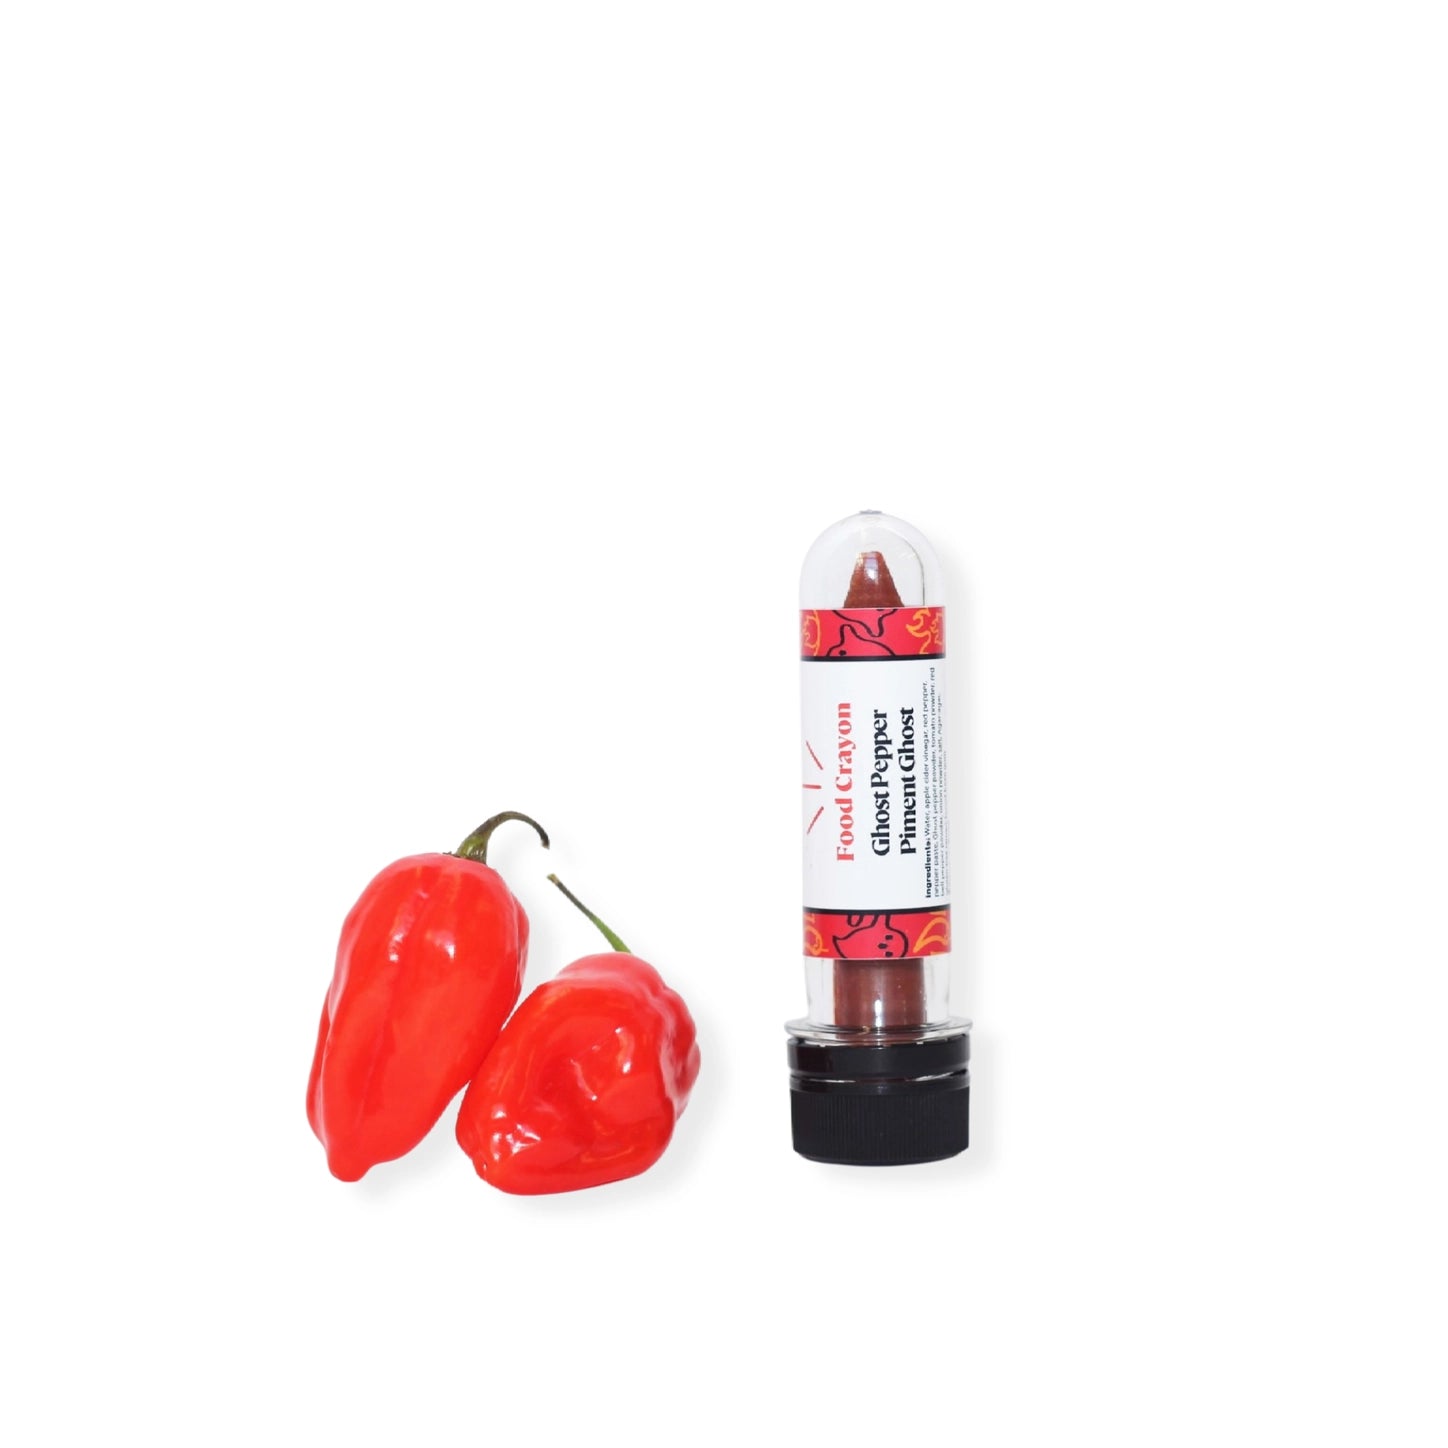 Red Bell Pepper Powder